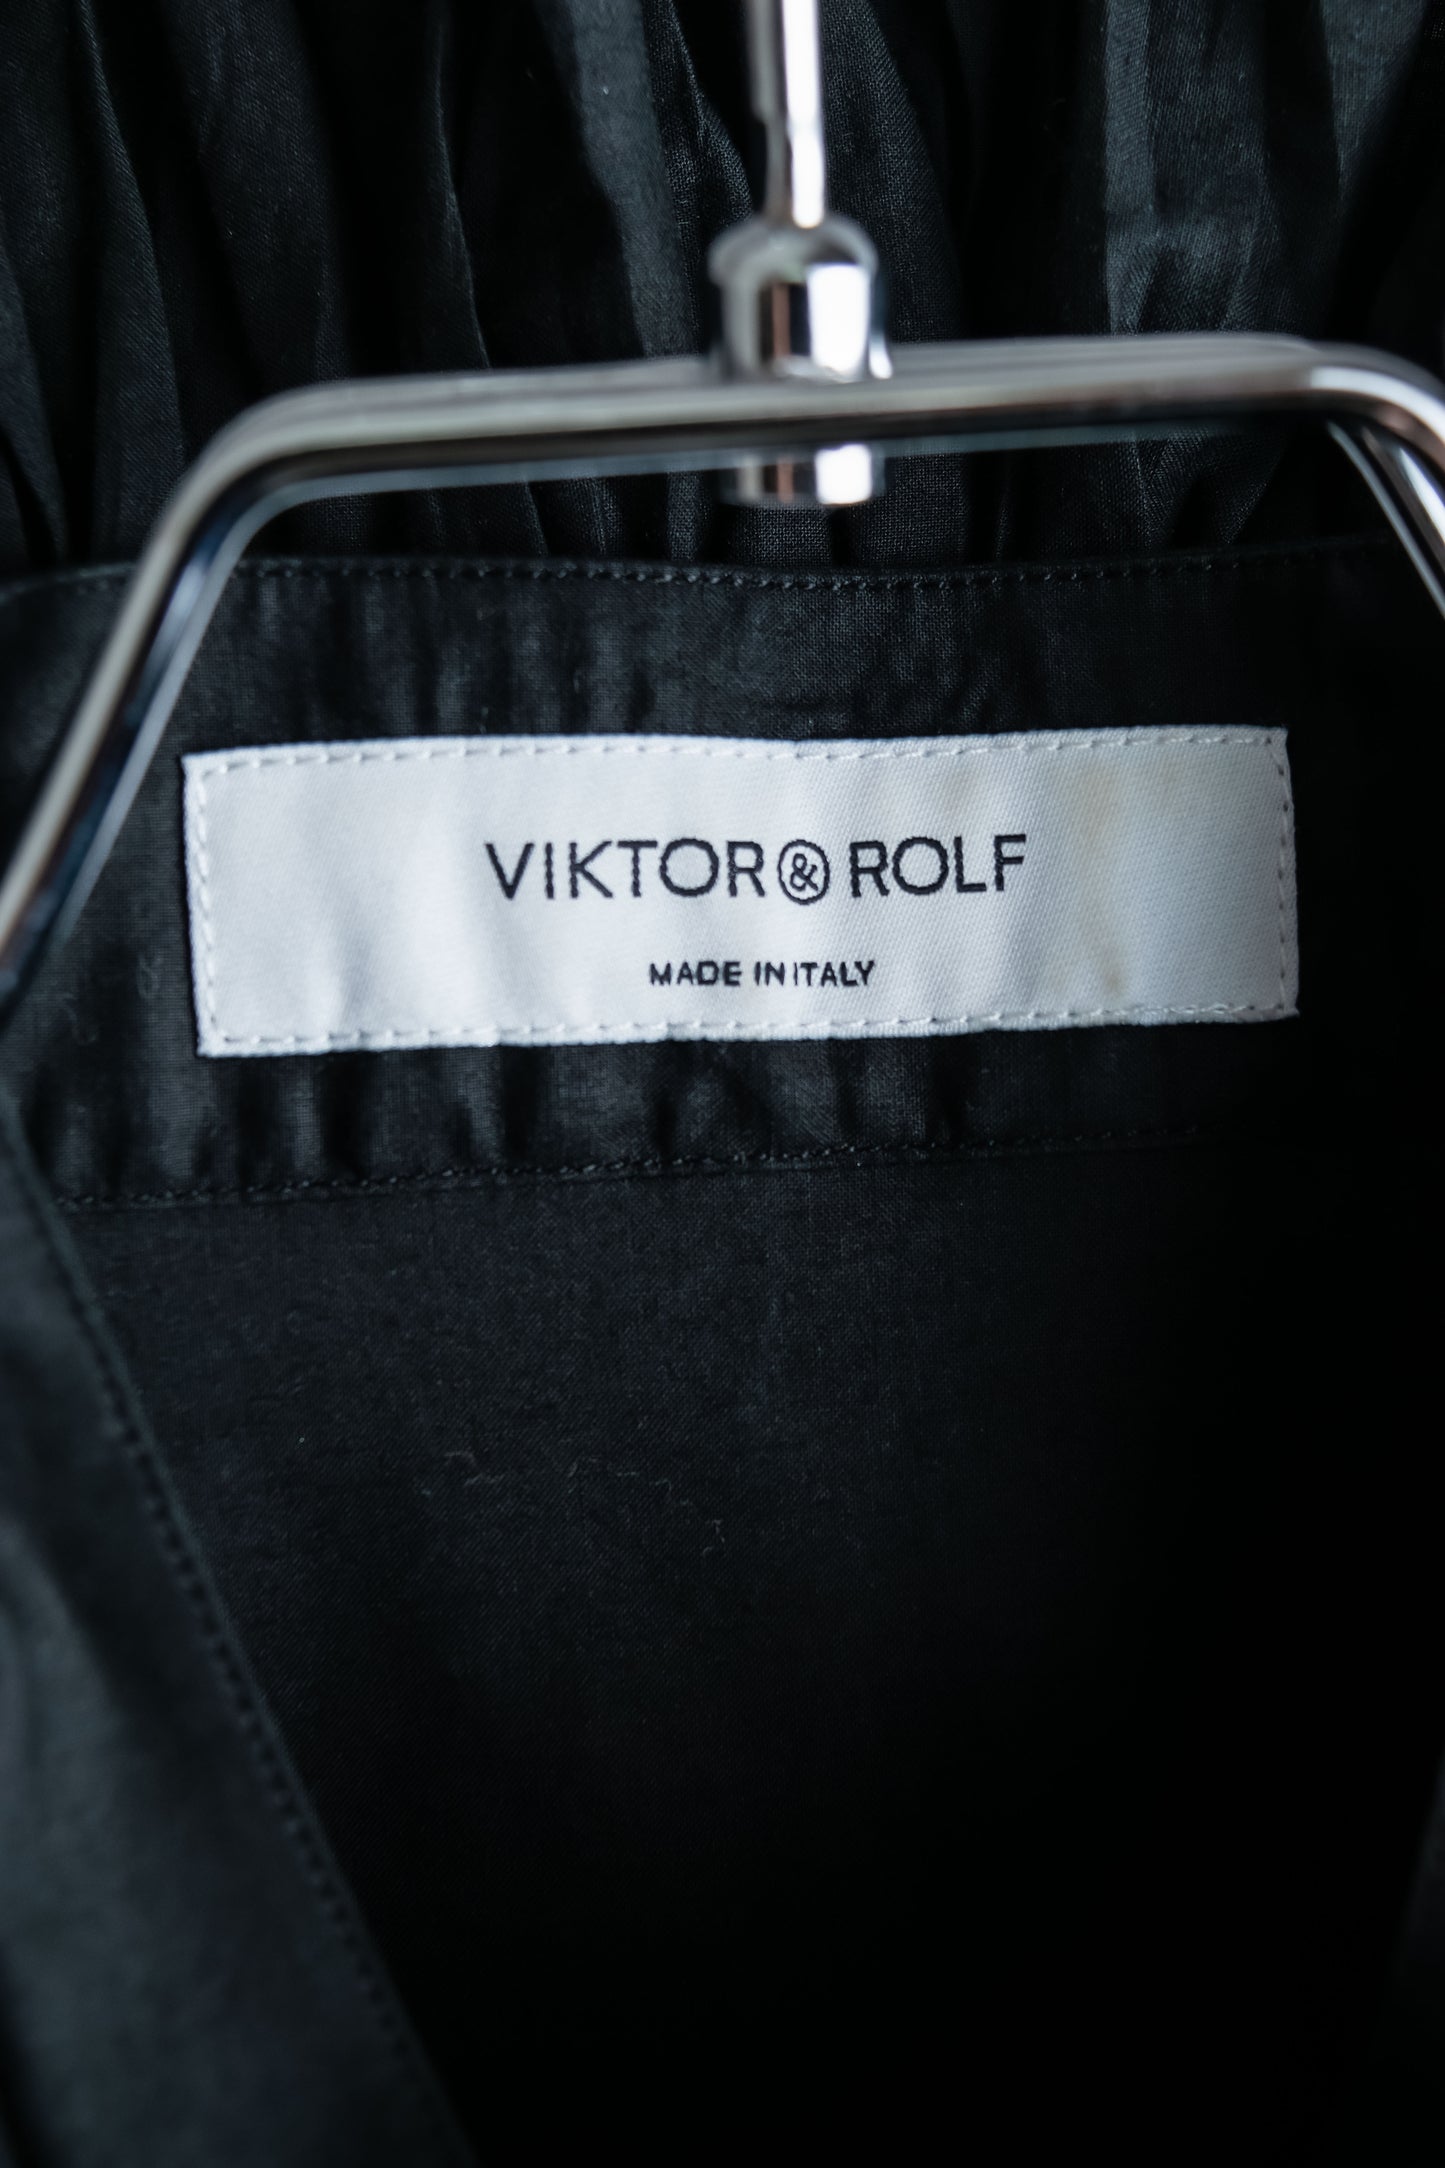 "VIKTOR&ROLF" Special oversized frill dress shirt